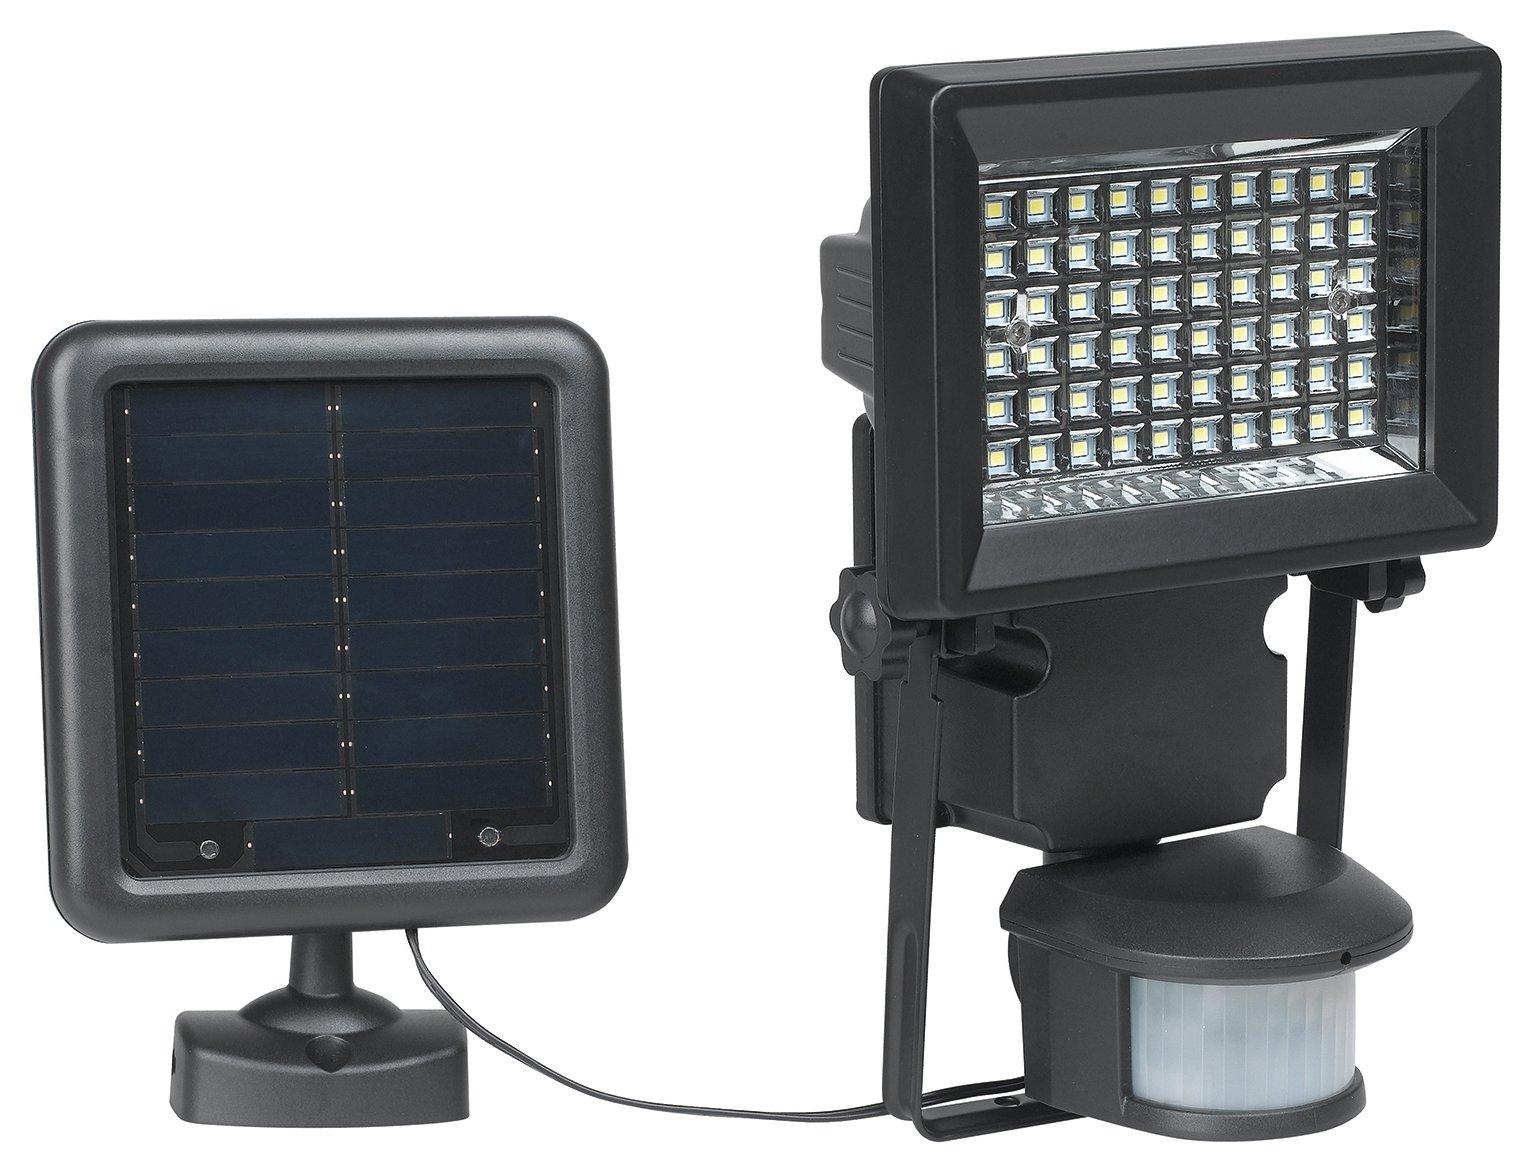 Duracell Sl002bdu Solar Security Light At Argos Reviews